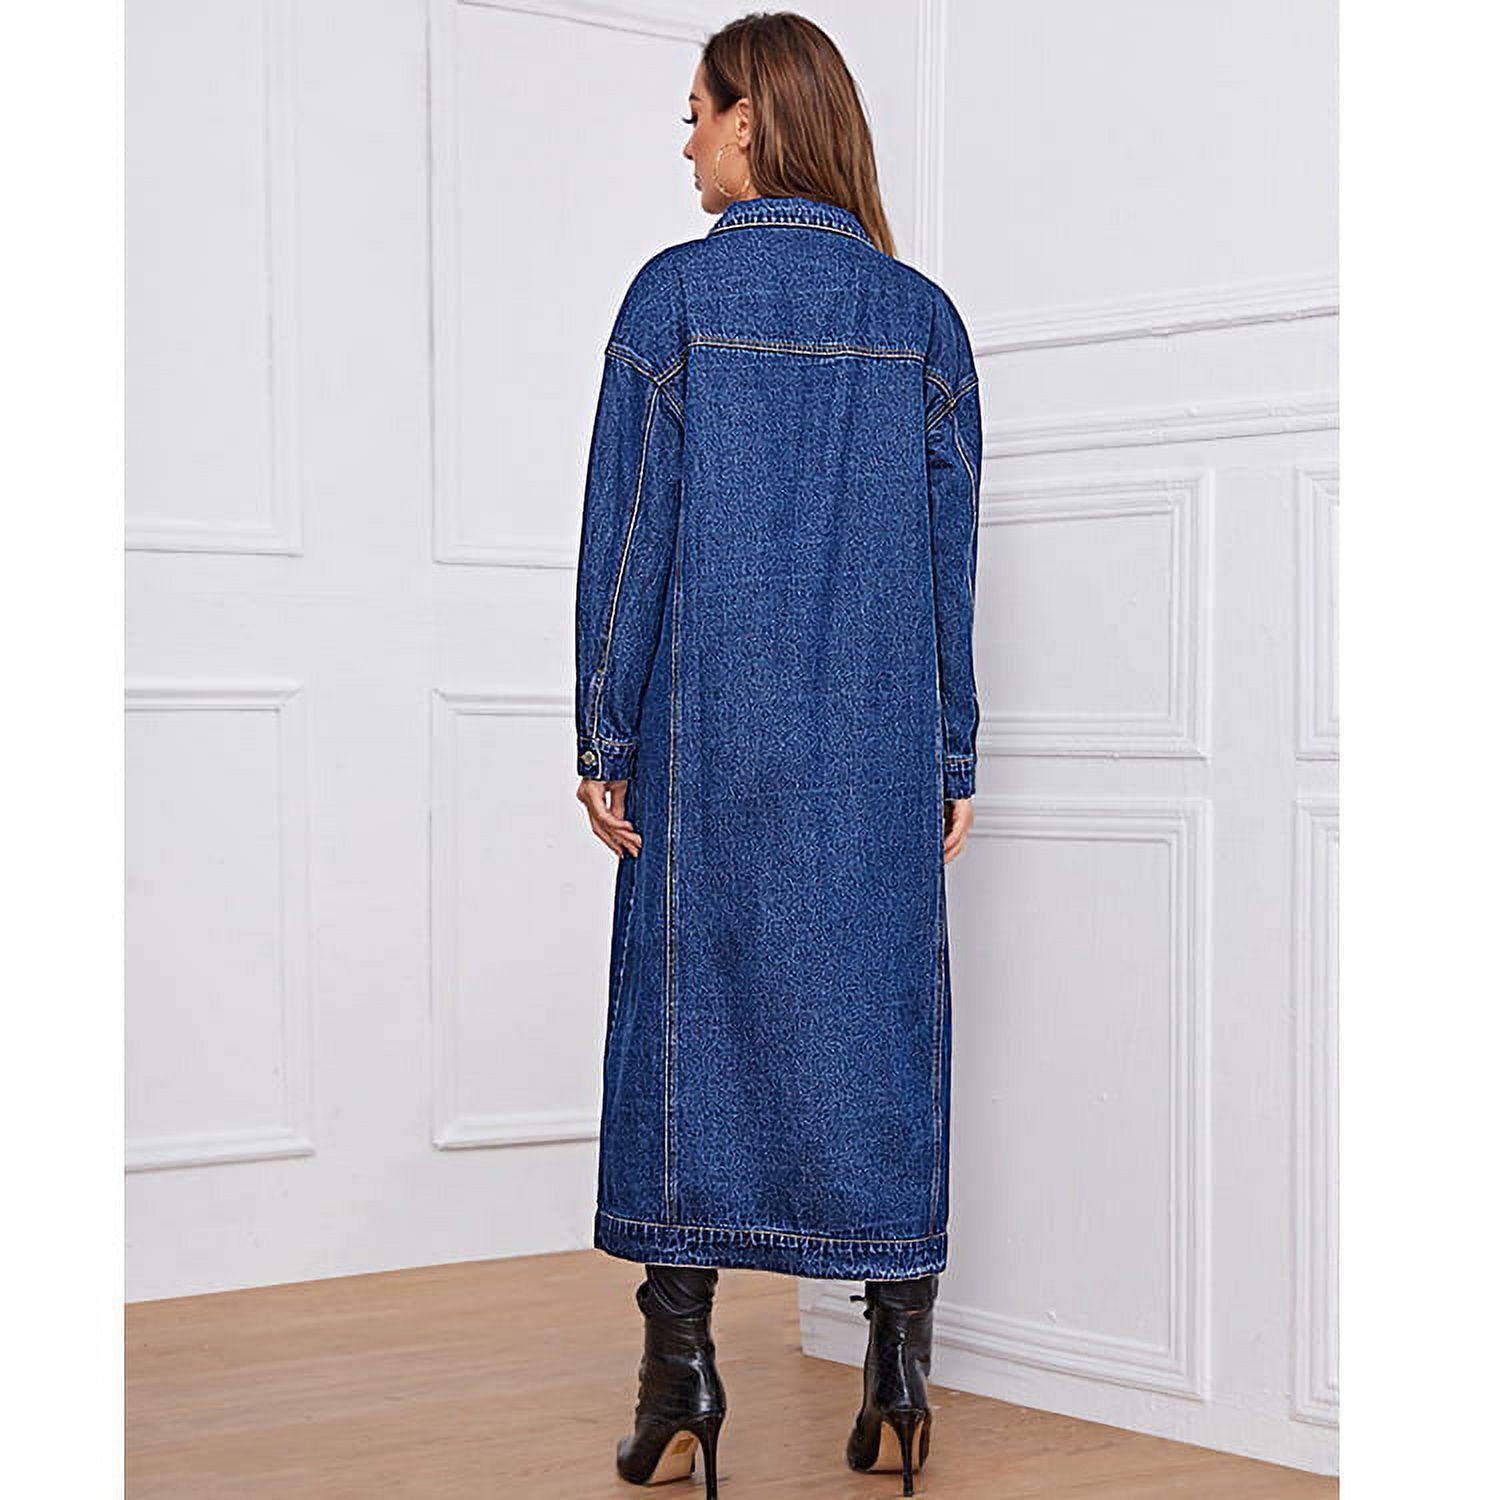 Tianlu Women's Fashion Spring Button Down Midi Long Denim Jean Jacket Trench Coat Blue, size L - image 5 of 5